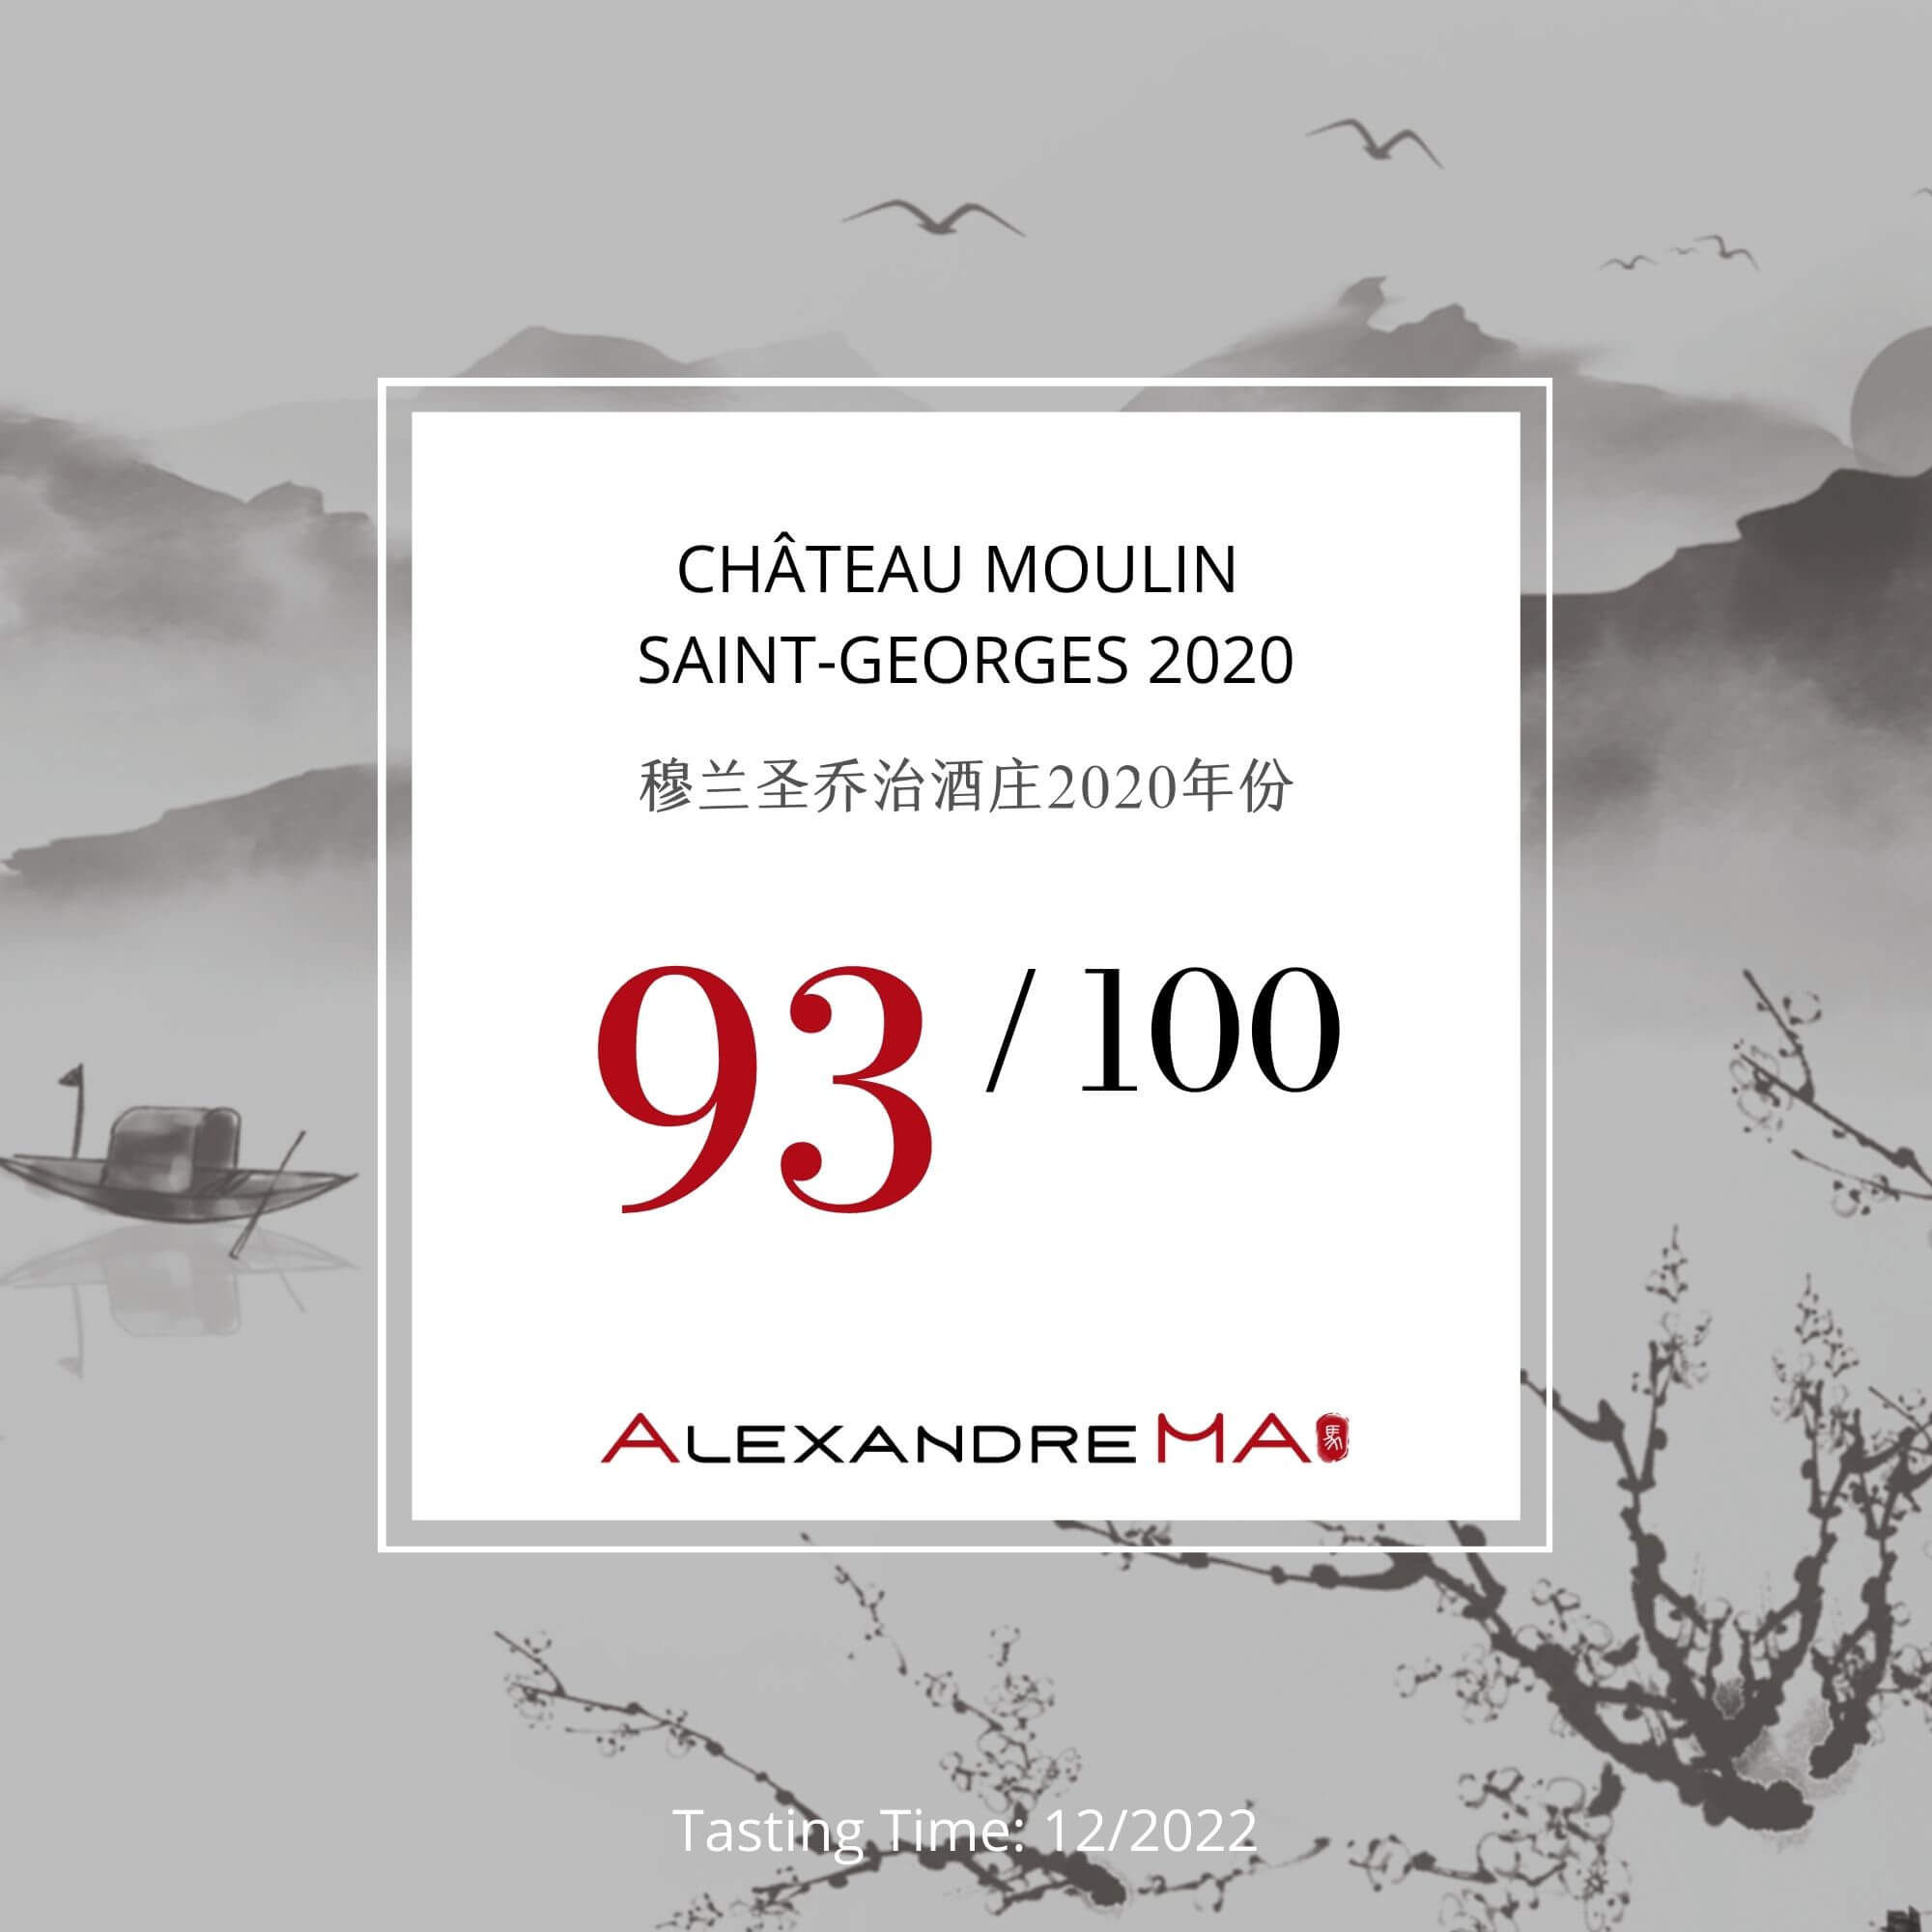 Château Moulin Saint-Georges 2020 - Alexandre MA